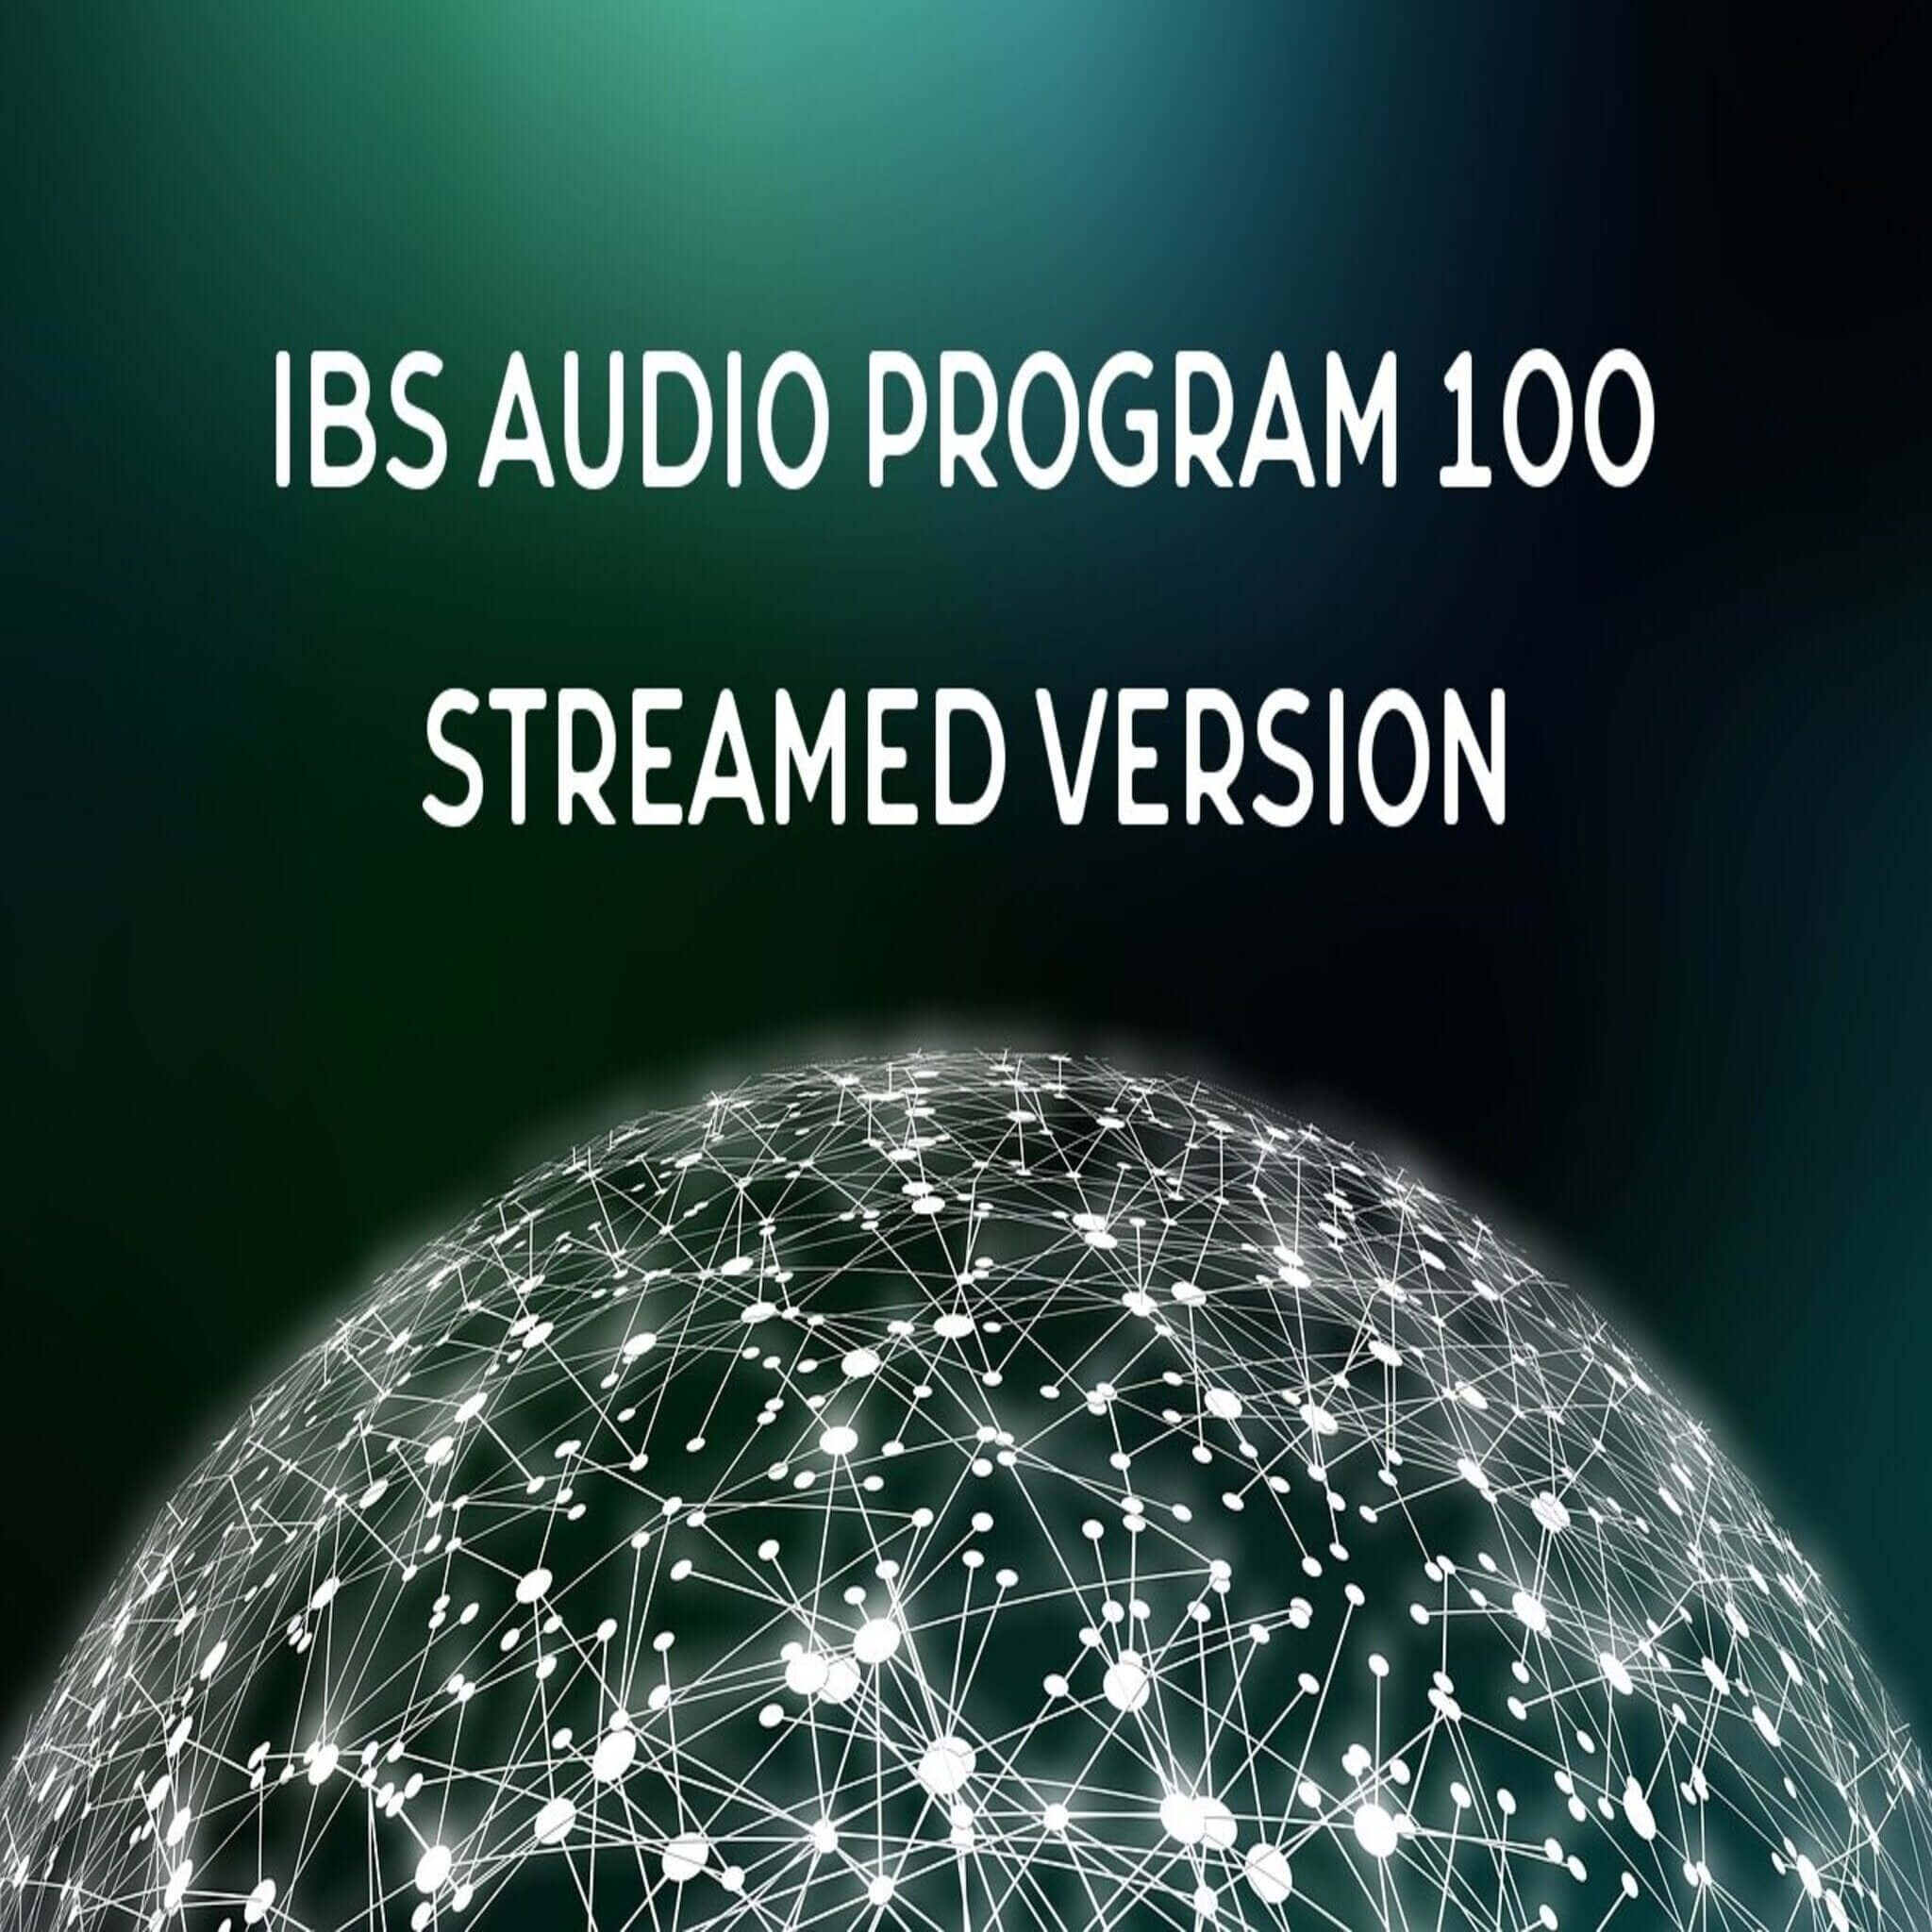 IBS Audio Program 100 for IBS Help treating Irritable Bowel Syndrome